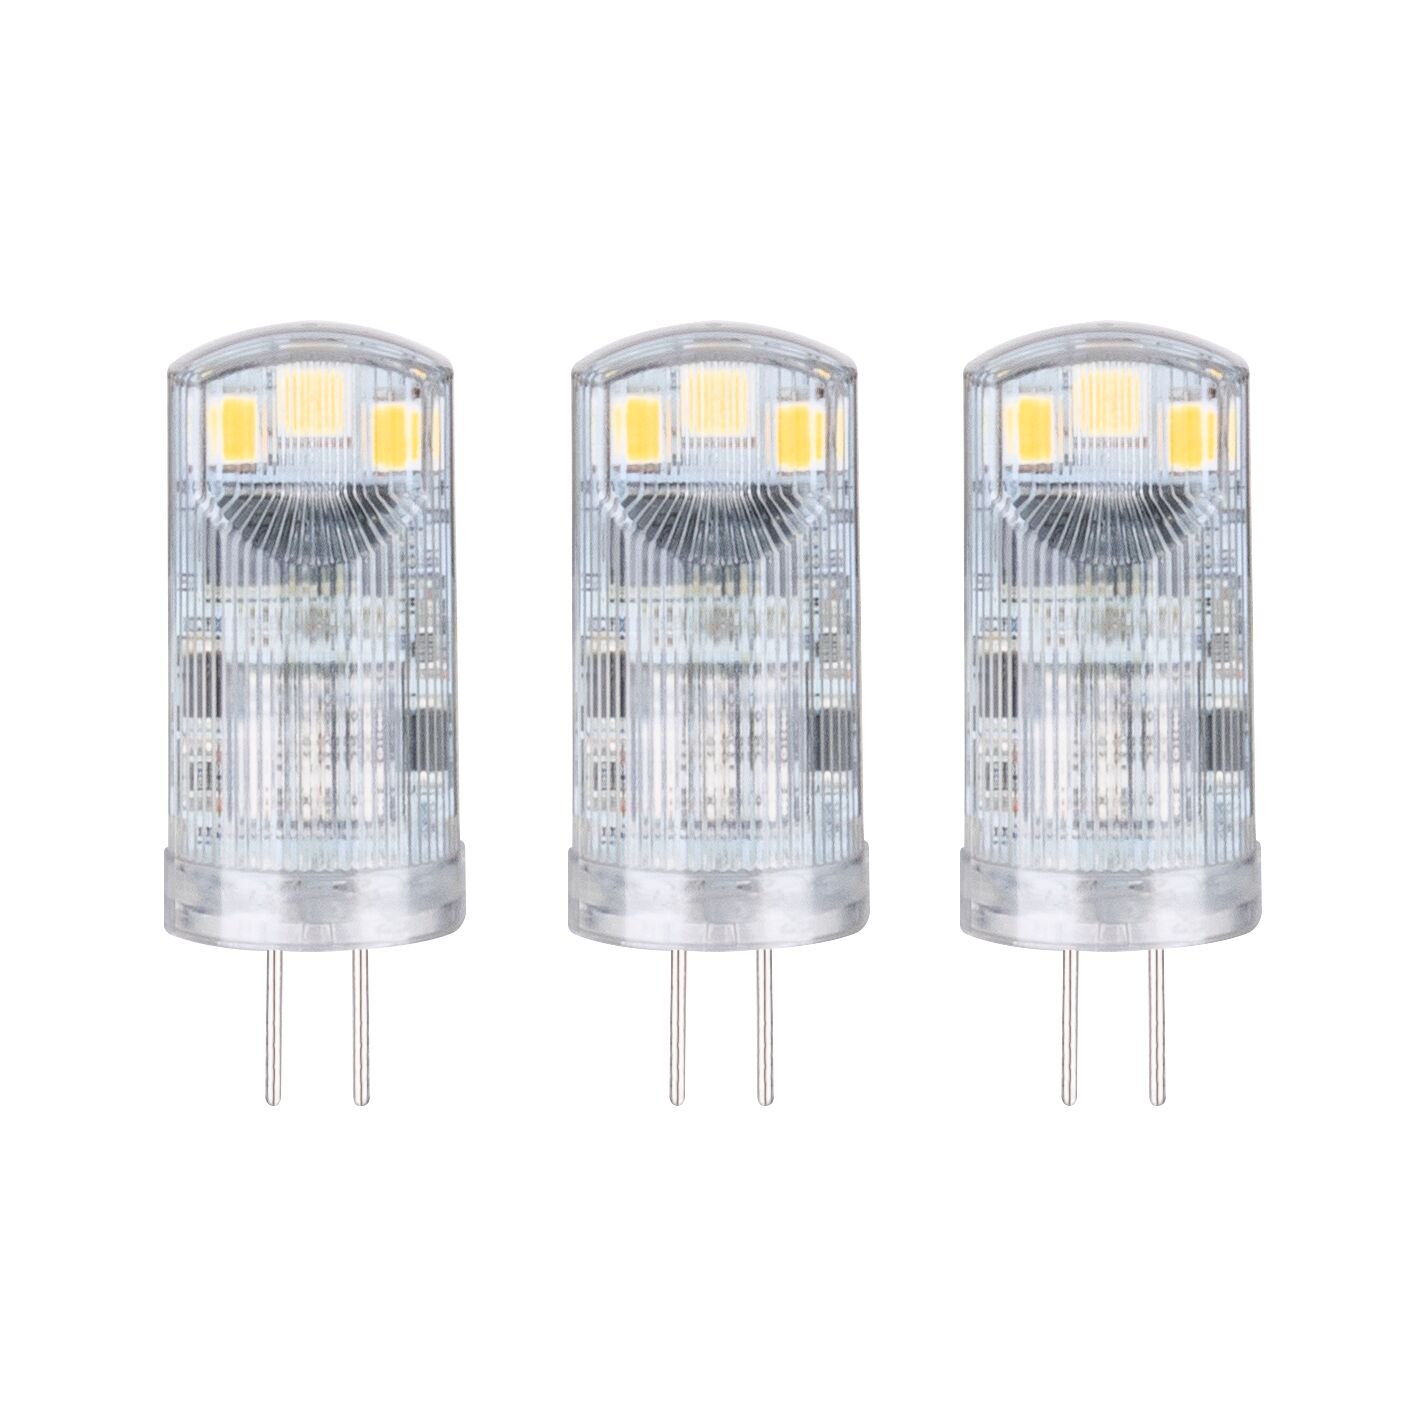 Standard 12 V LED-stiftsokkel G4 Pakke med 3 styk 3x200lm 3x1,8W 2700K Klar